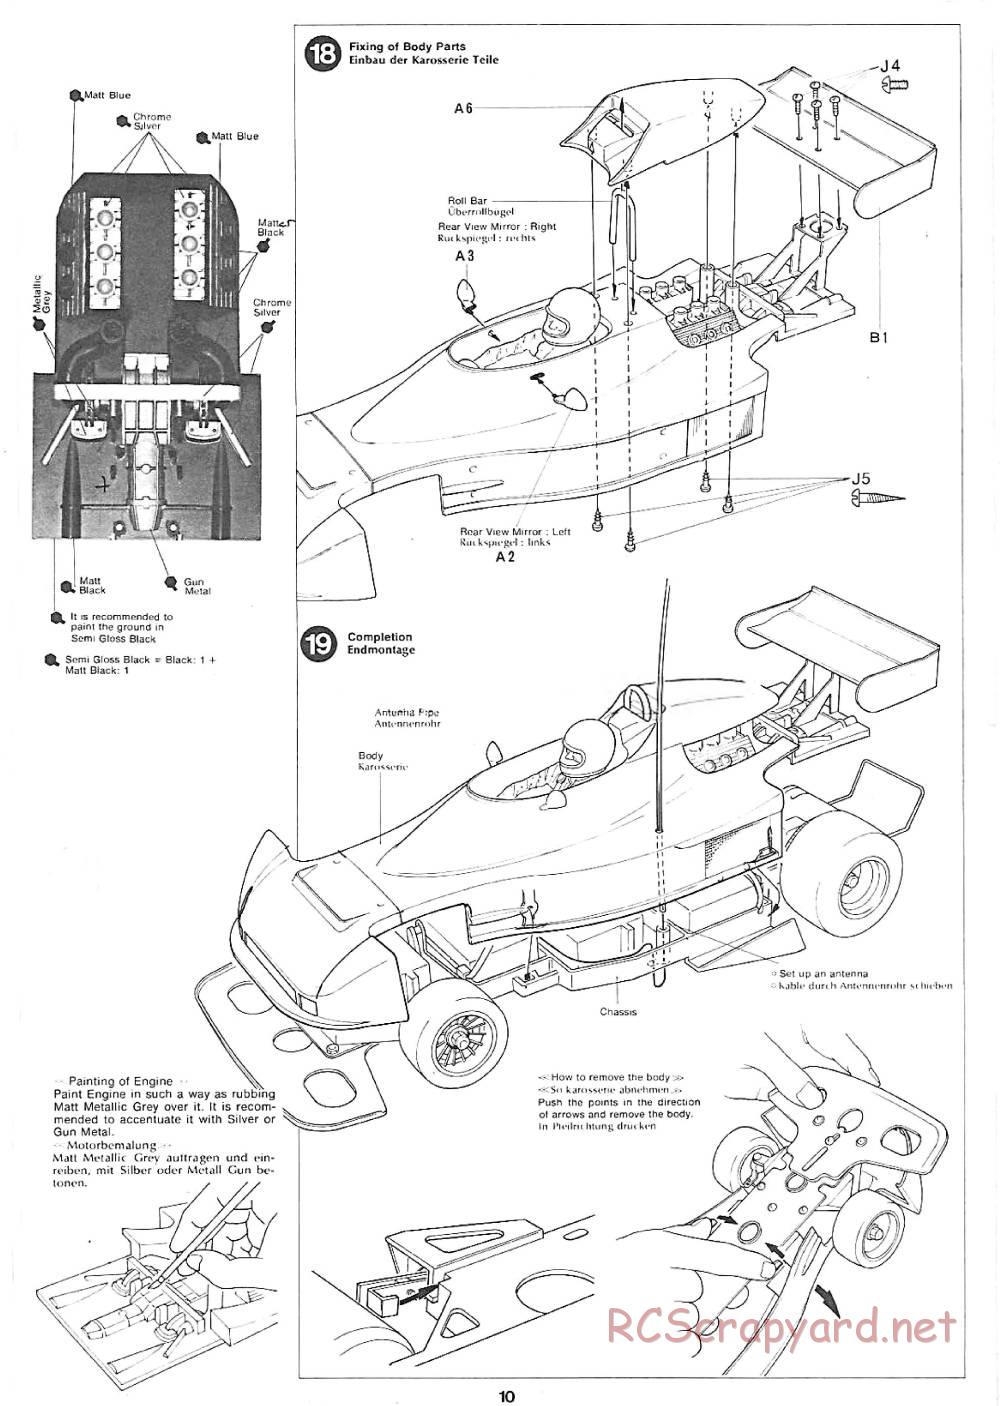 Tamiya - Martini Mk22 Renault (F2) - 58014 - Manual - Page 10